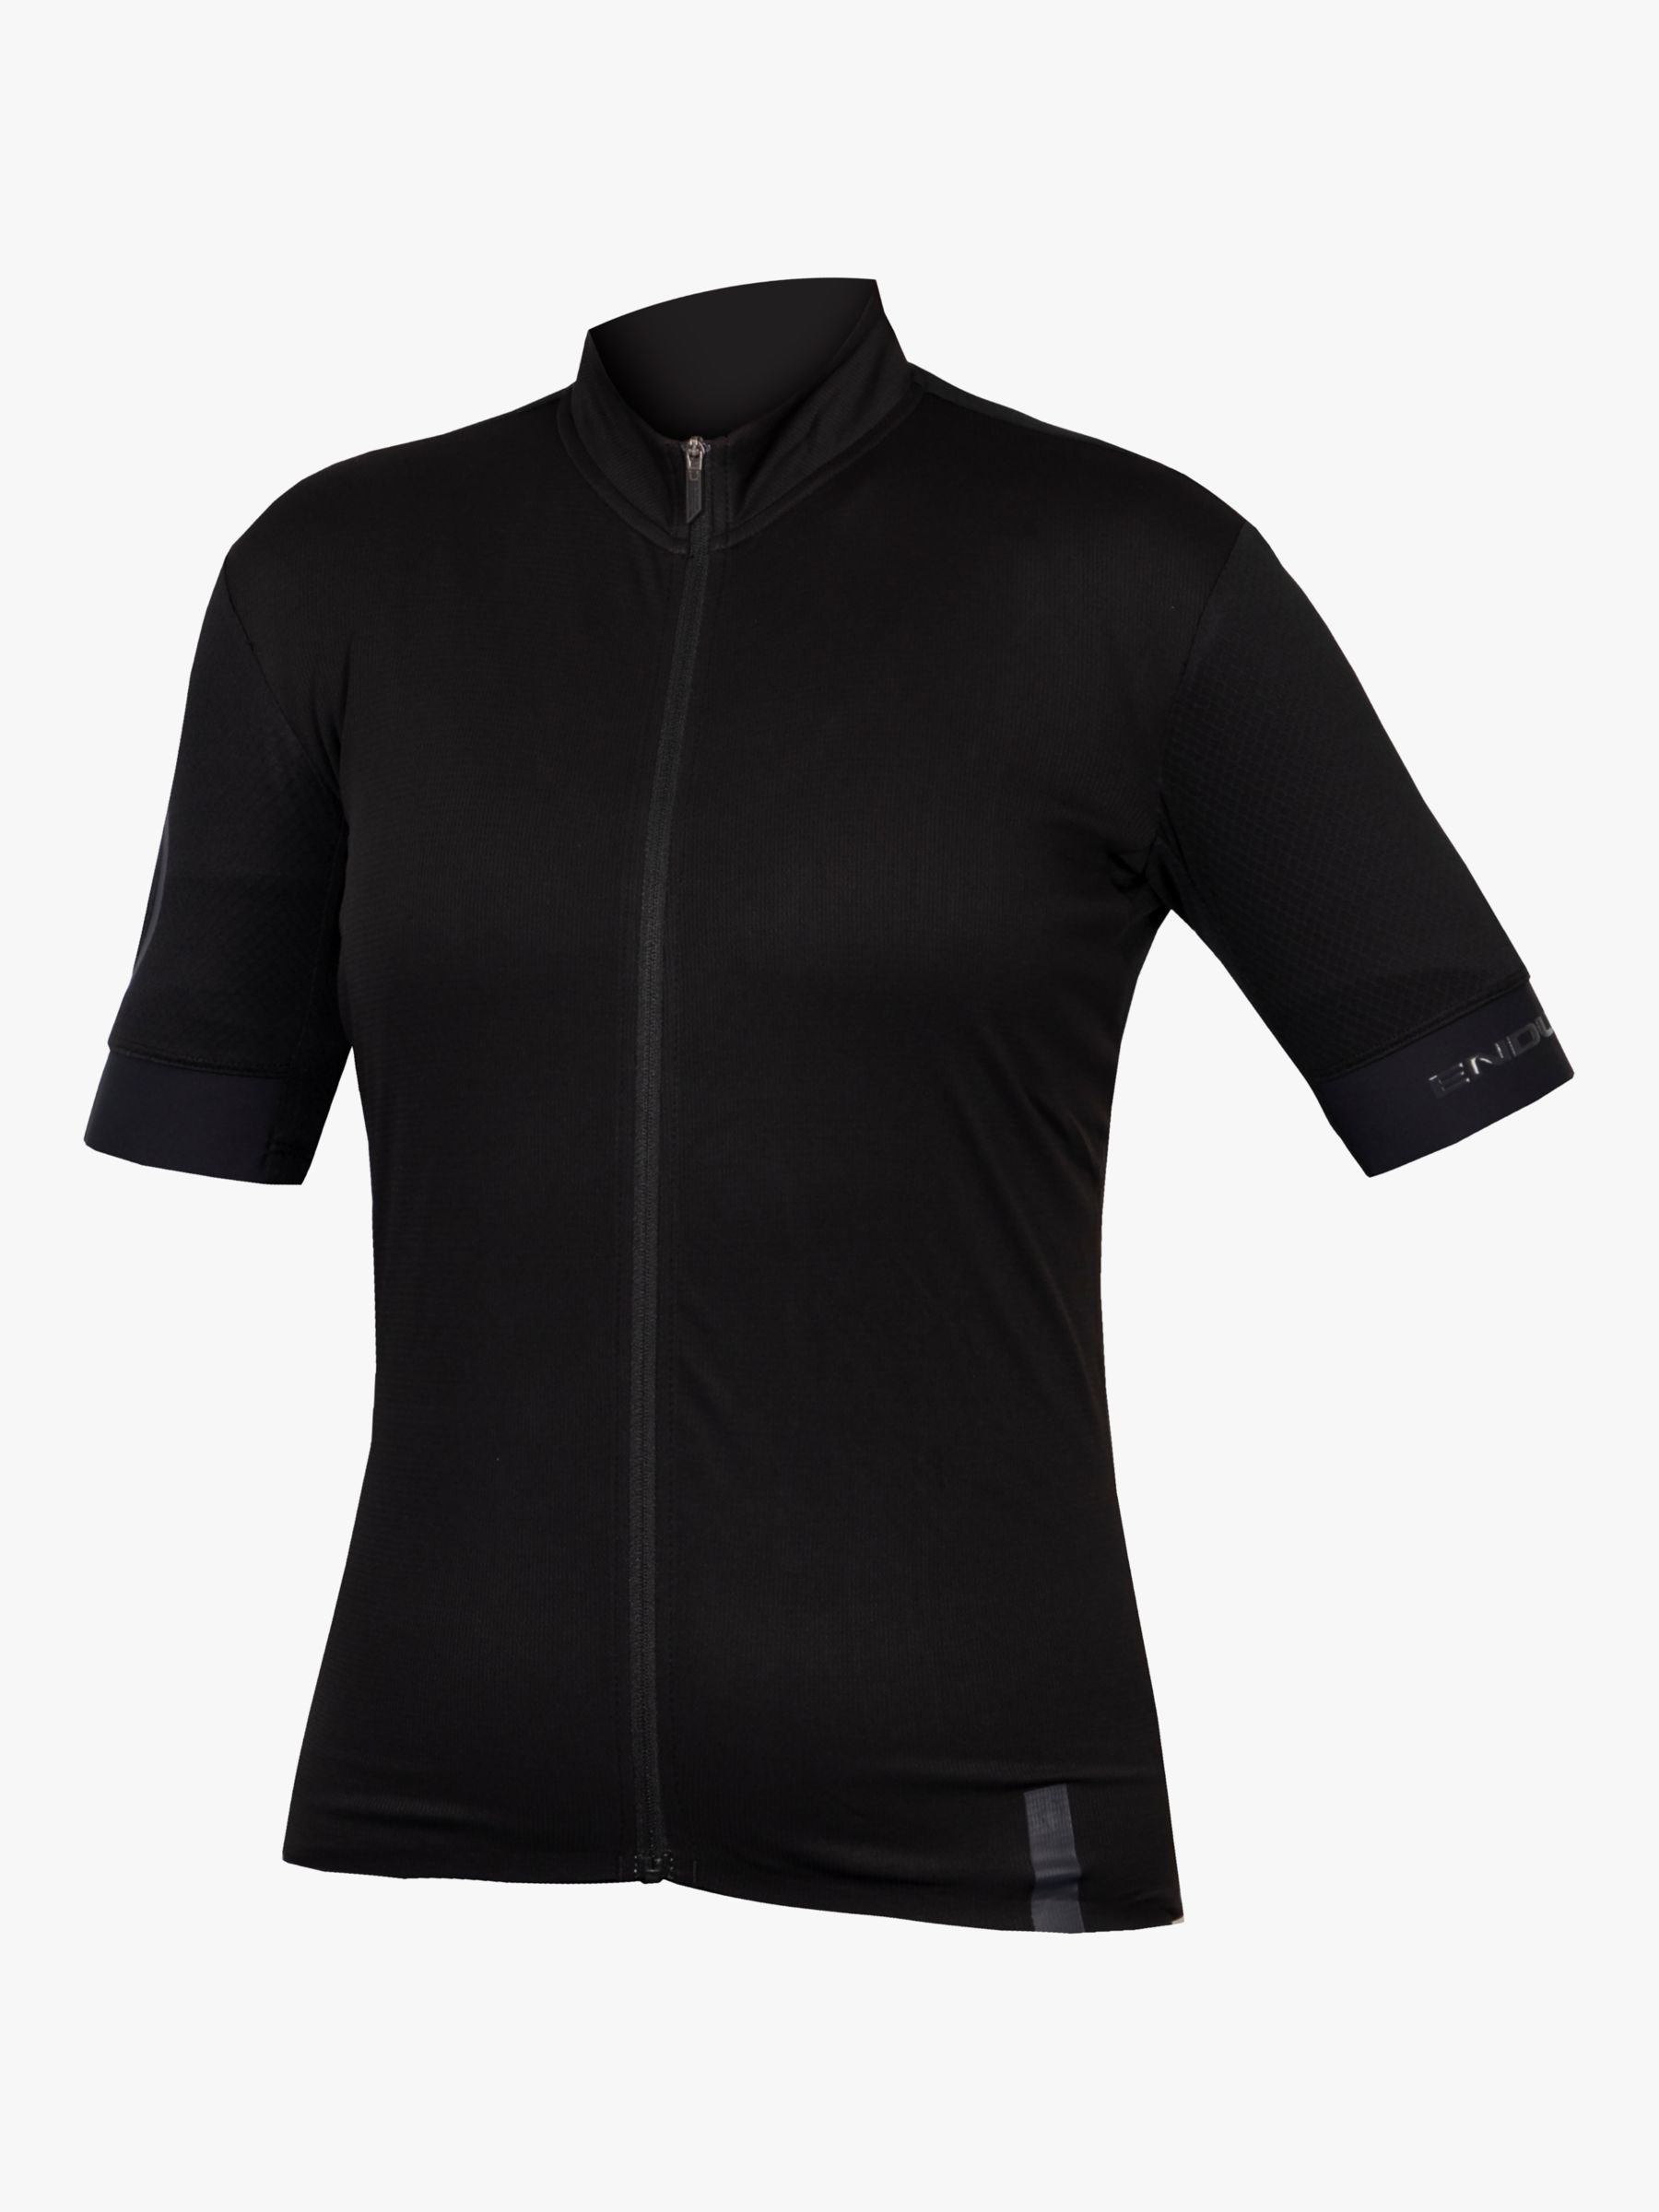 Endura Women's FS260 Short Sleeve Jersey, Black, XS